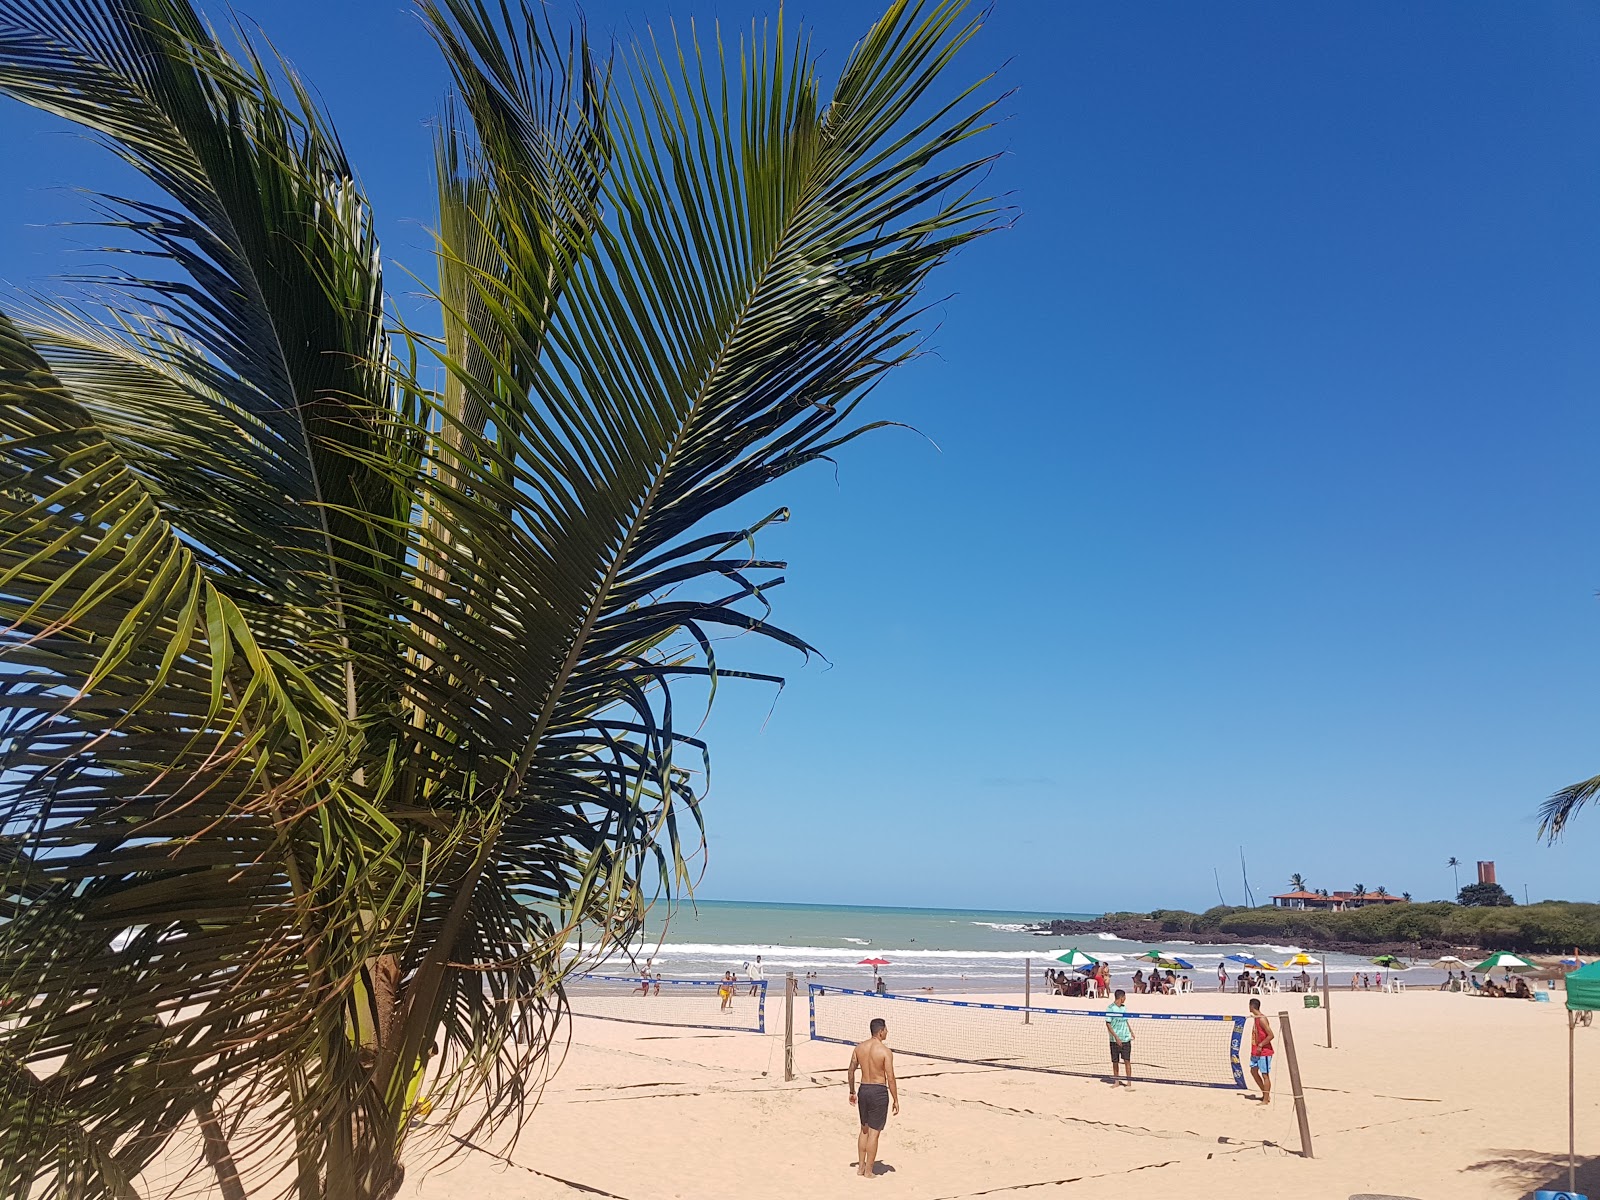 Foto de Praia de Miami - lugar popular entre os apreciadores de relaxamento